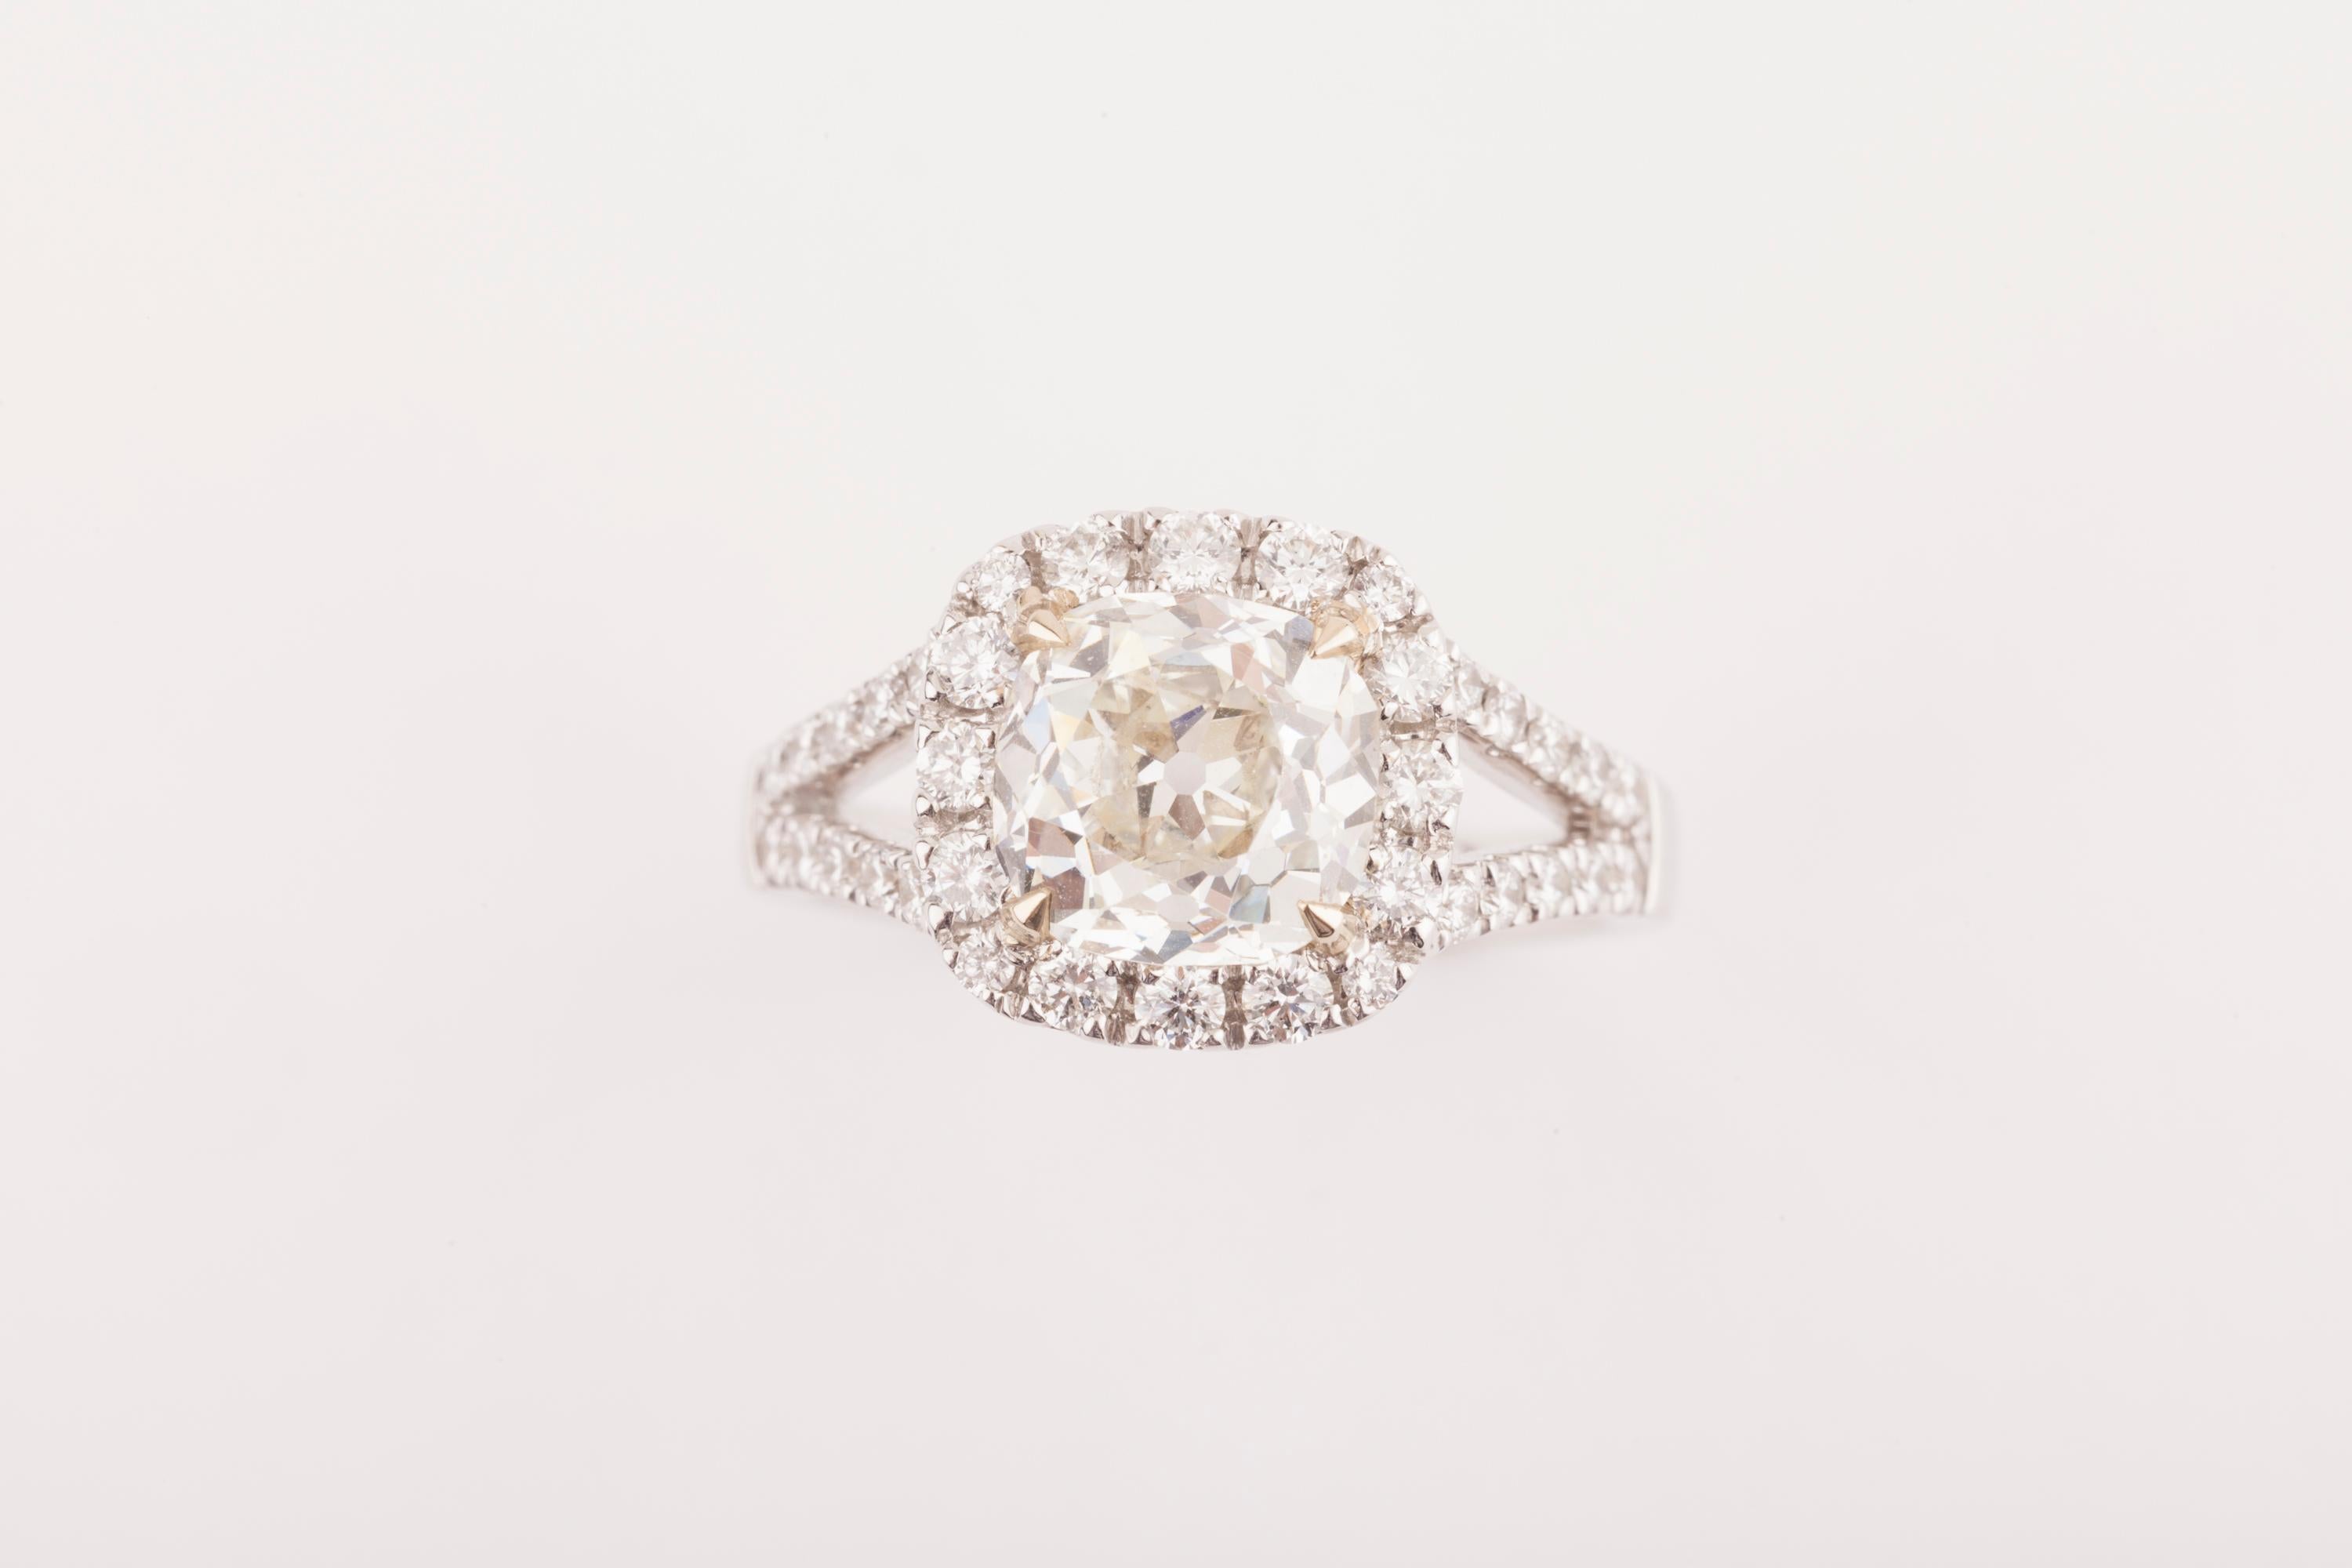 Cushion Cut Certified 2.61 Carat Diamond Engagement Ring